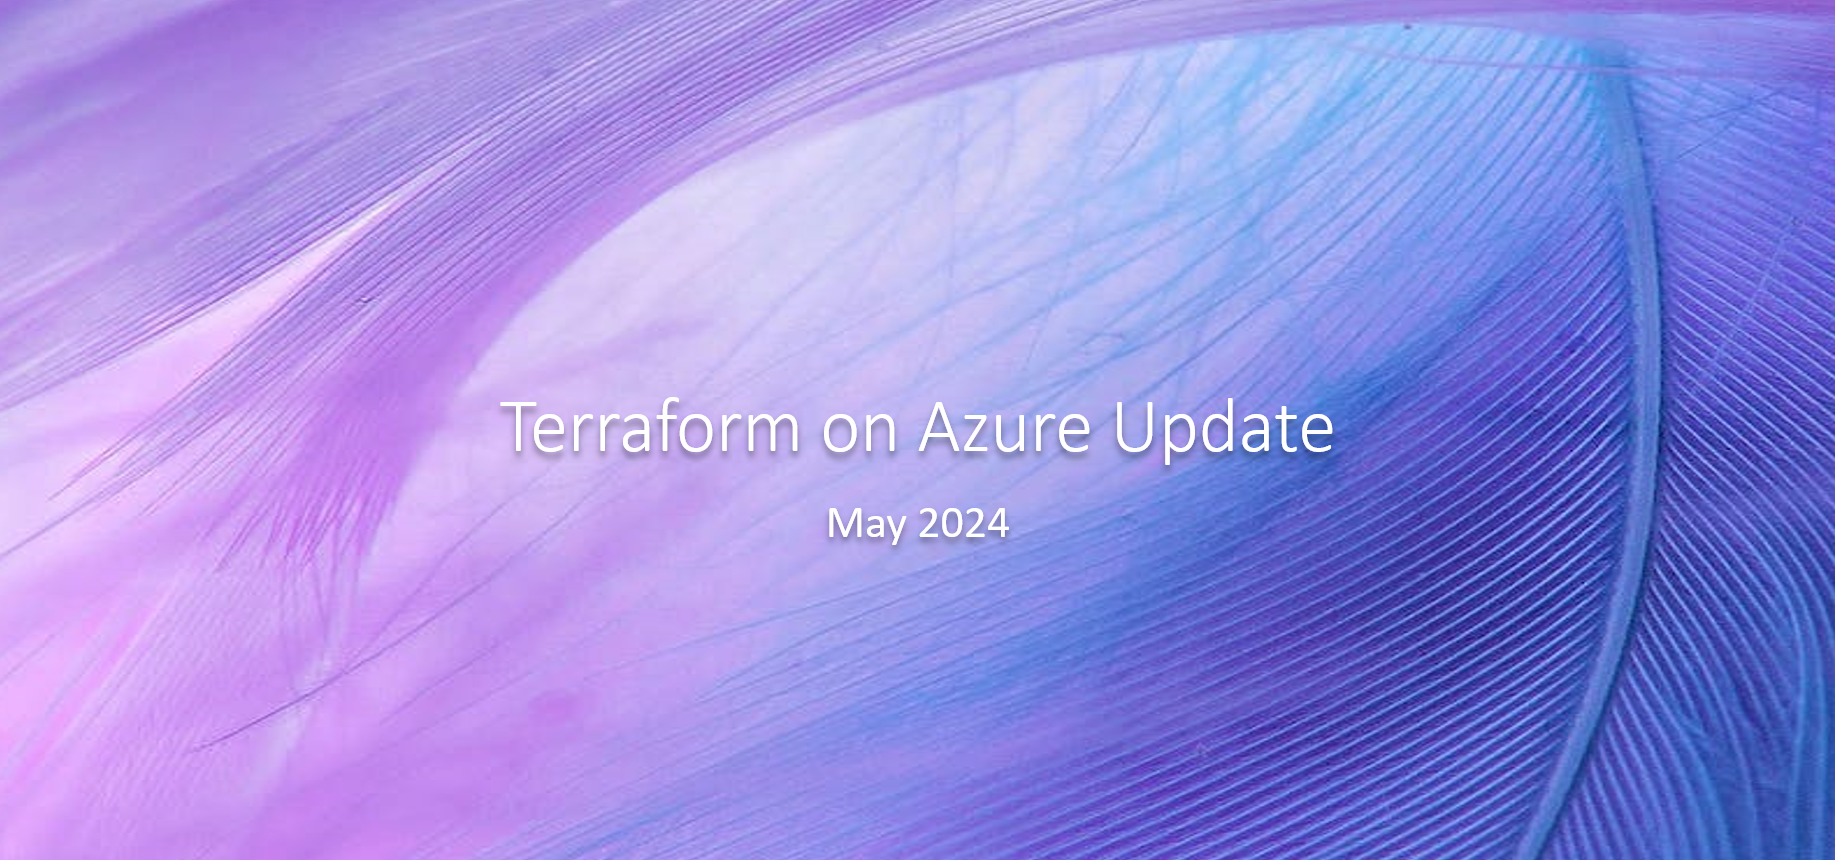 Terraform on Azure May 2024 Update